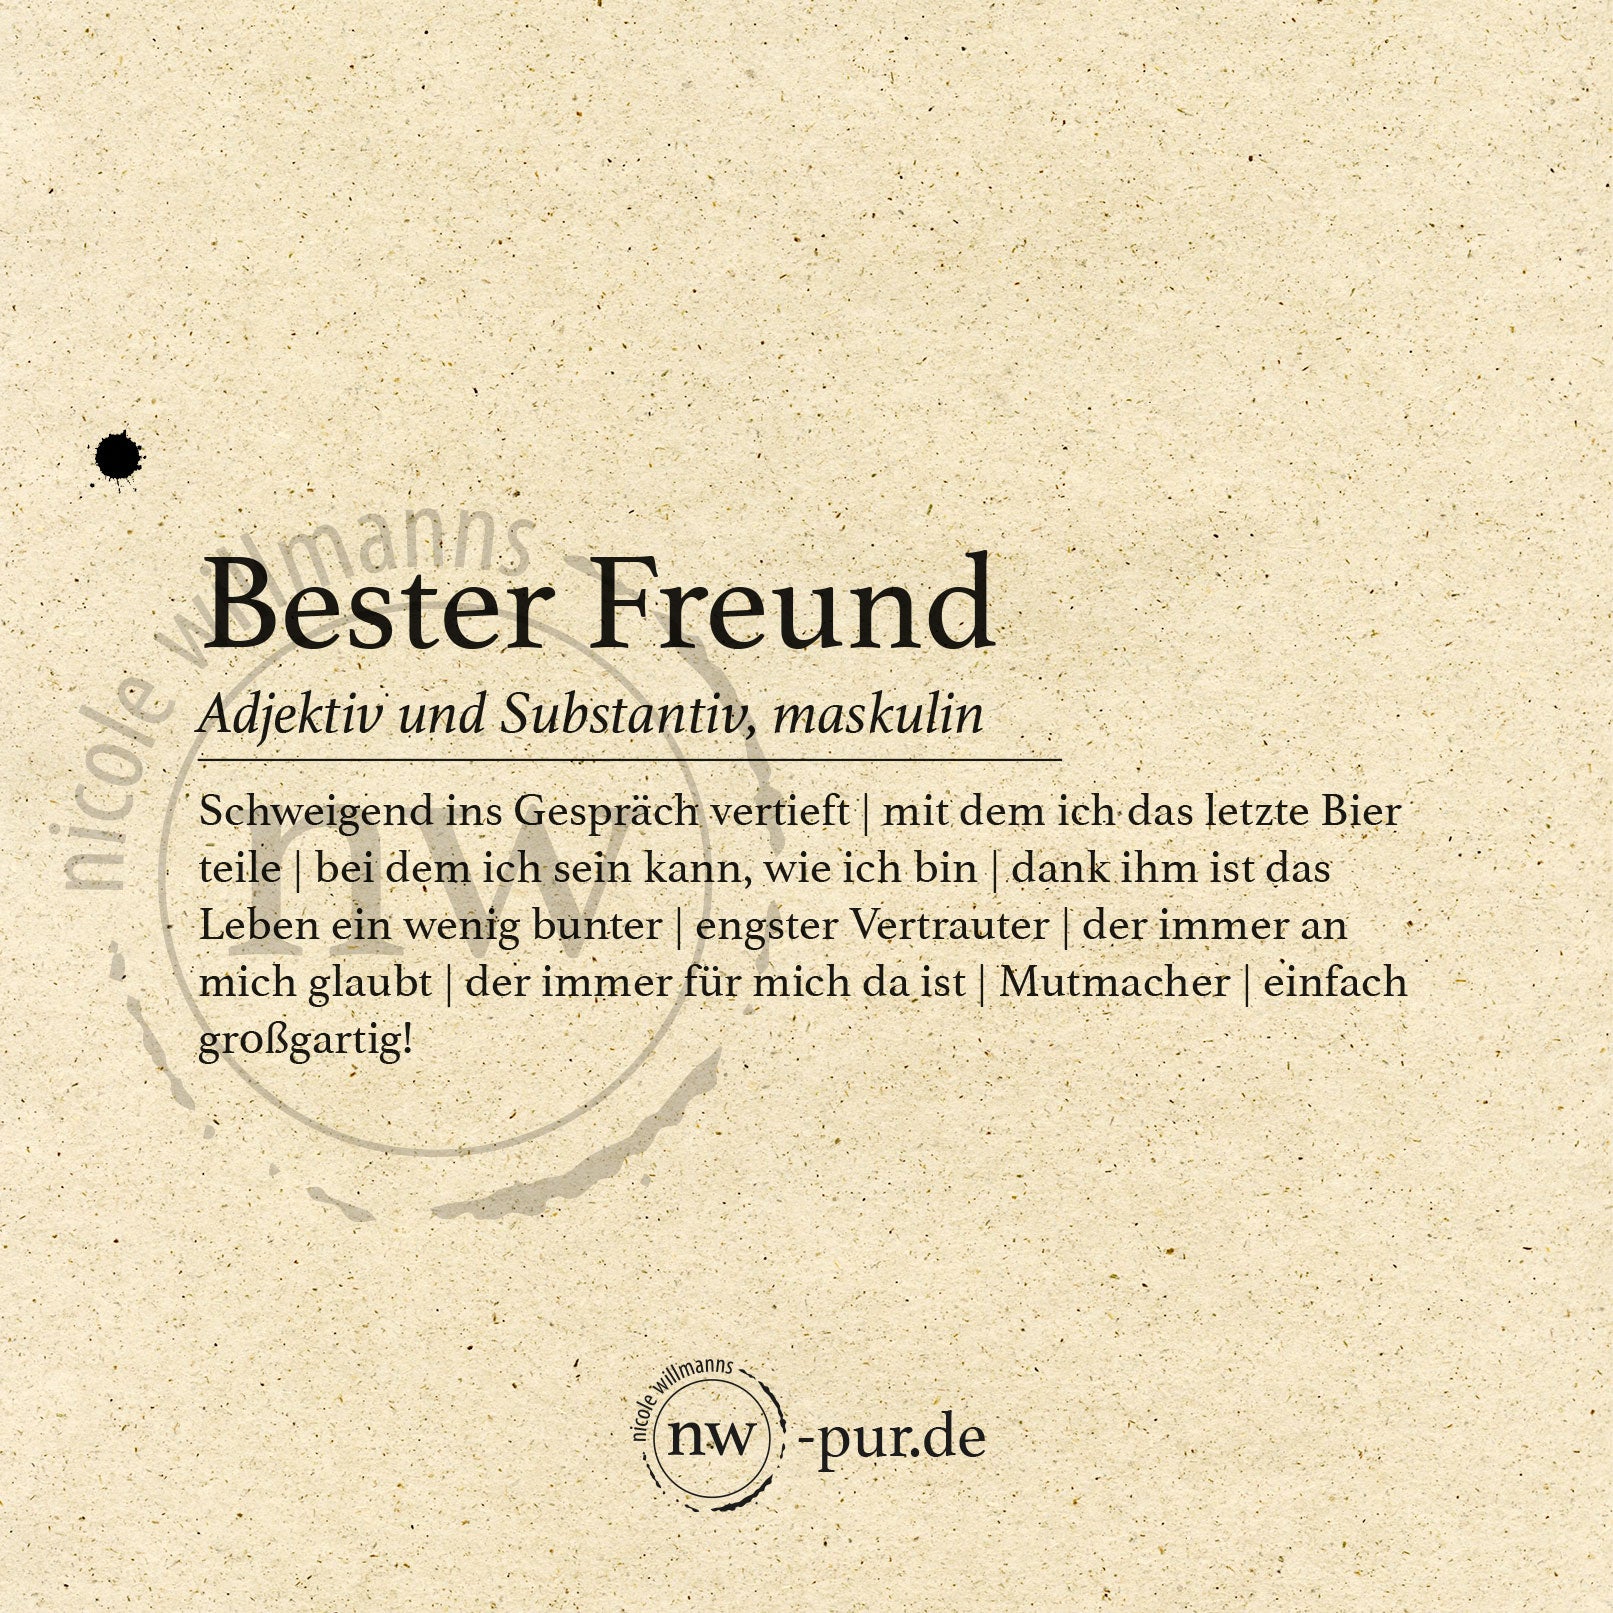 Postkarte "Bester Freund"